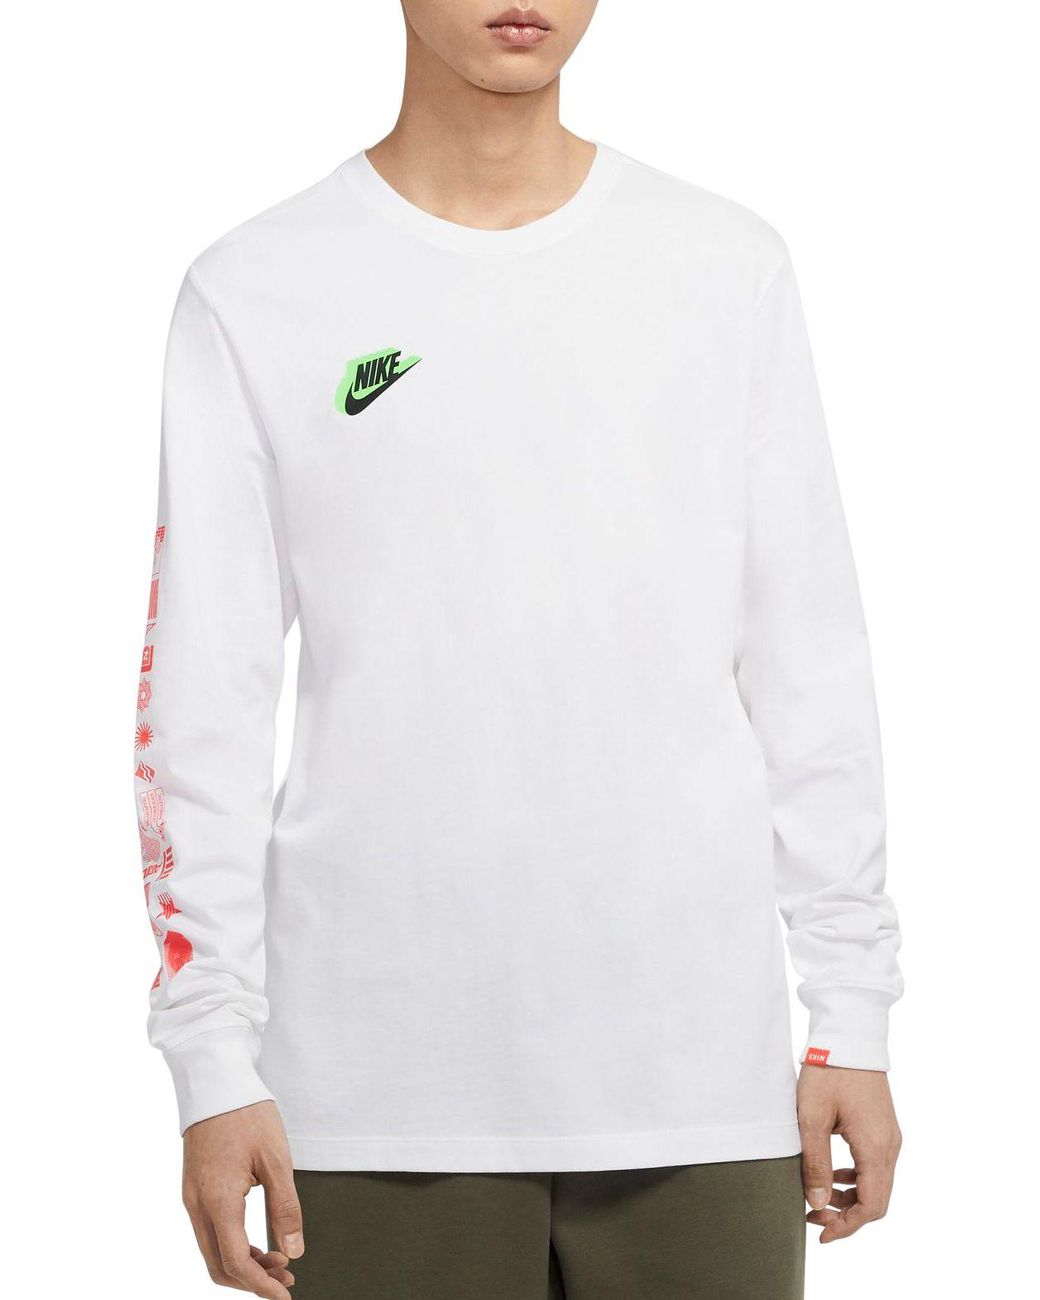 Nike Sportswear Worldwide Graphic Long Sleeve Shirt in White for Men - Lyst